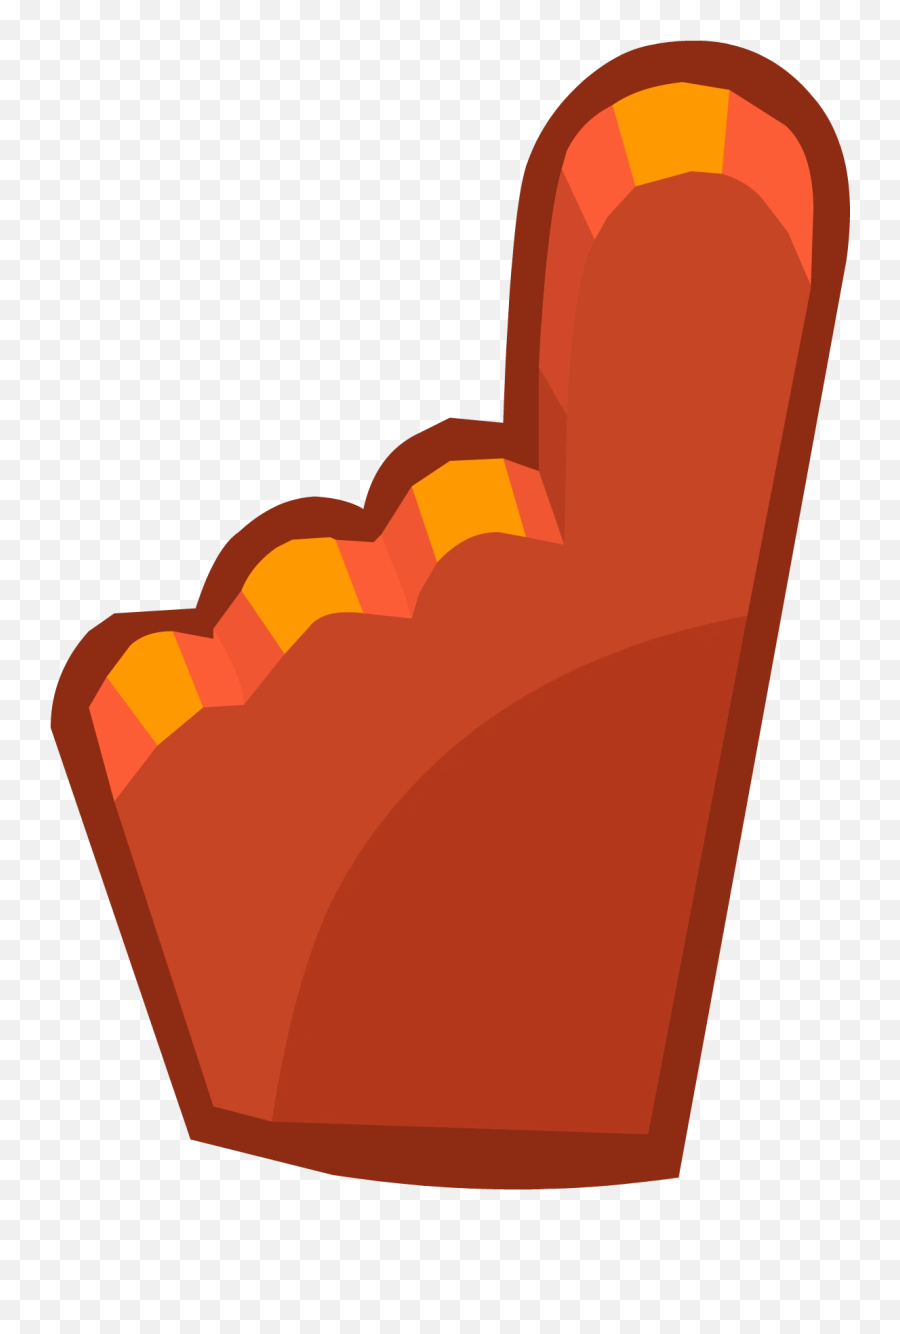 List Of Emoticons - Chair Emoji,Finger Point Emoticon